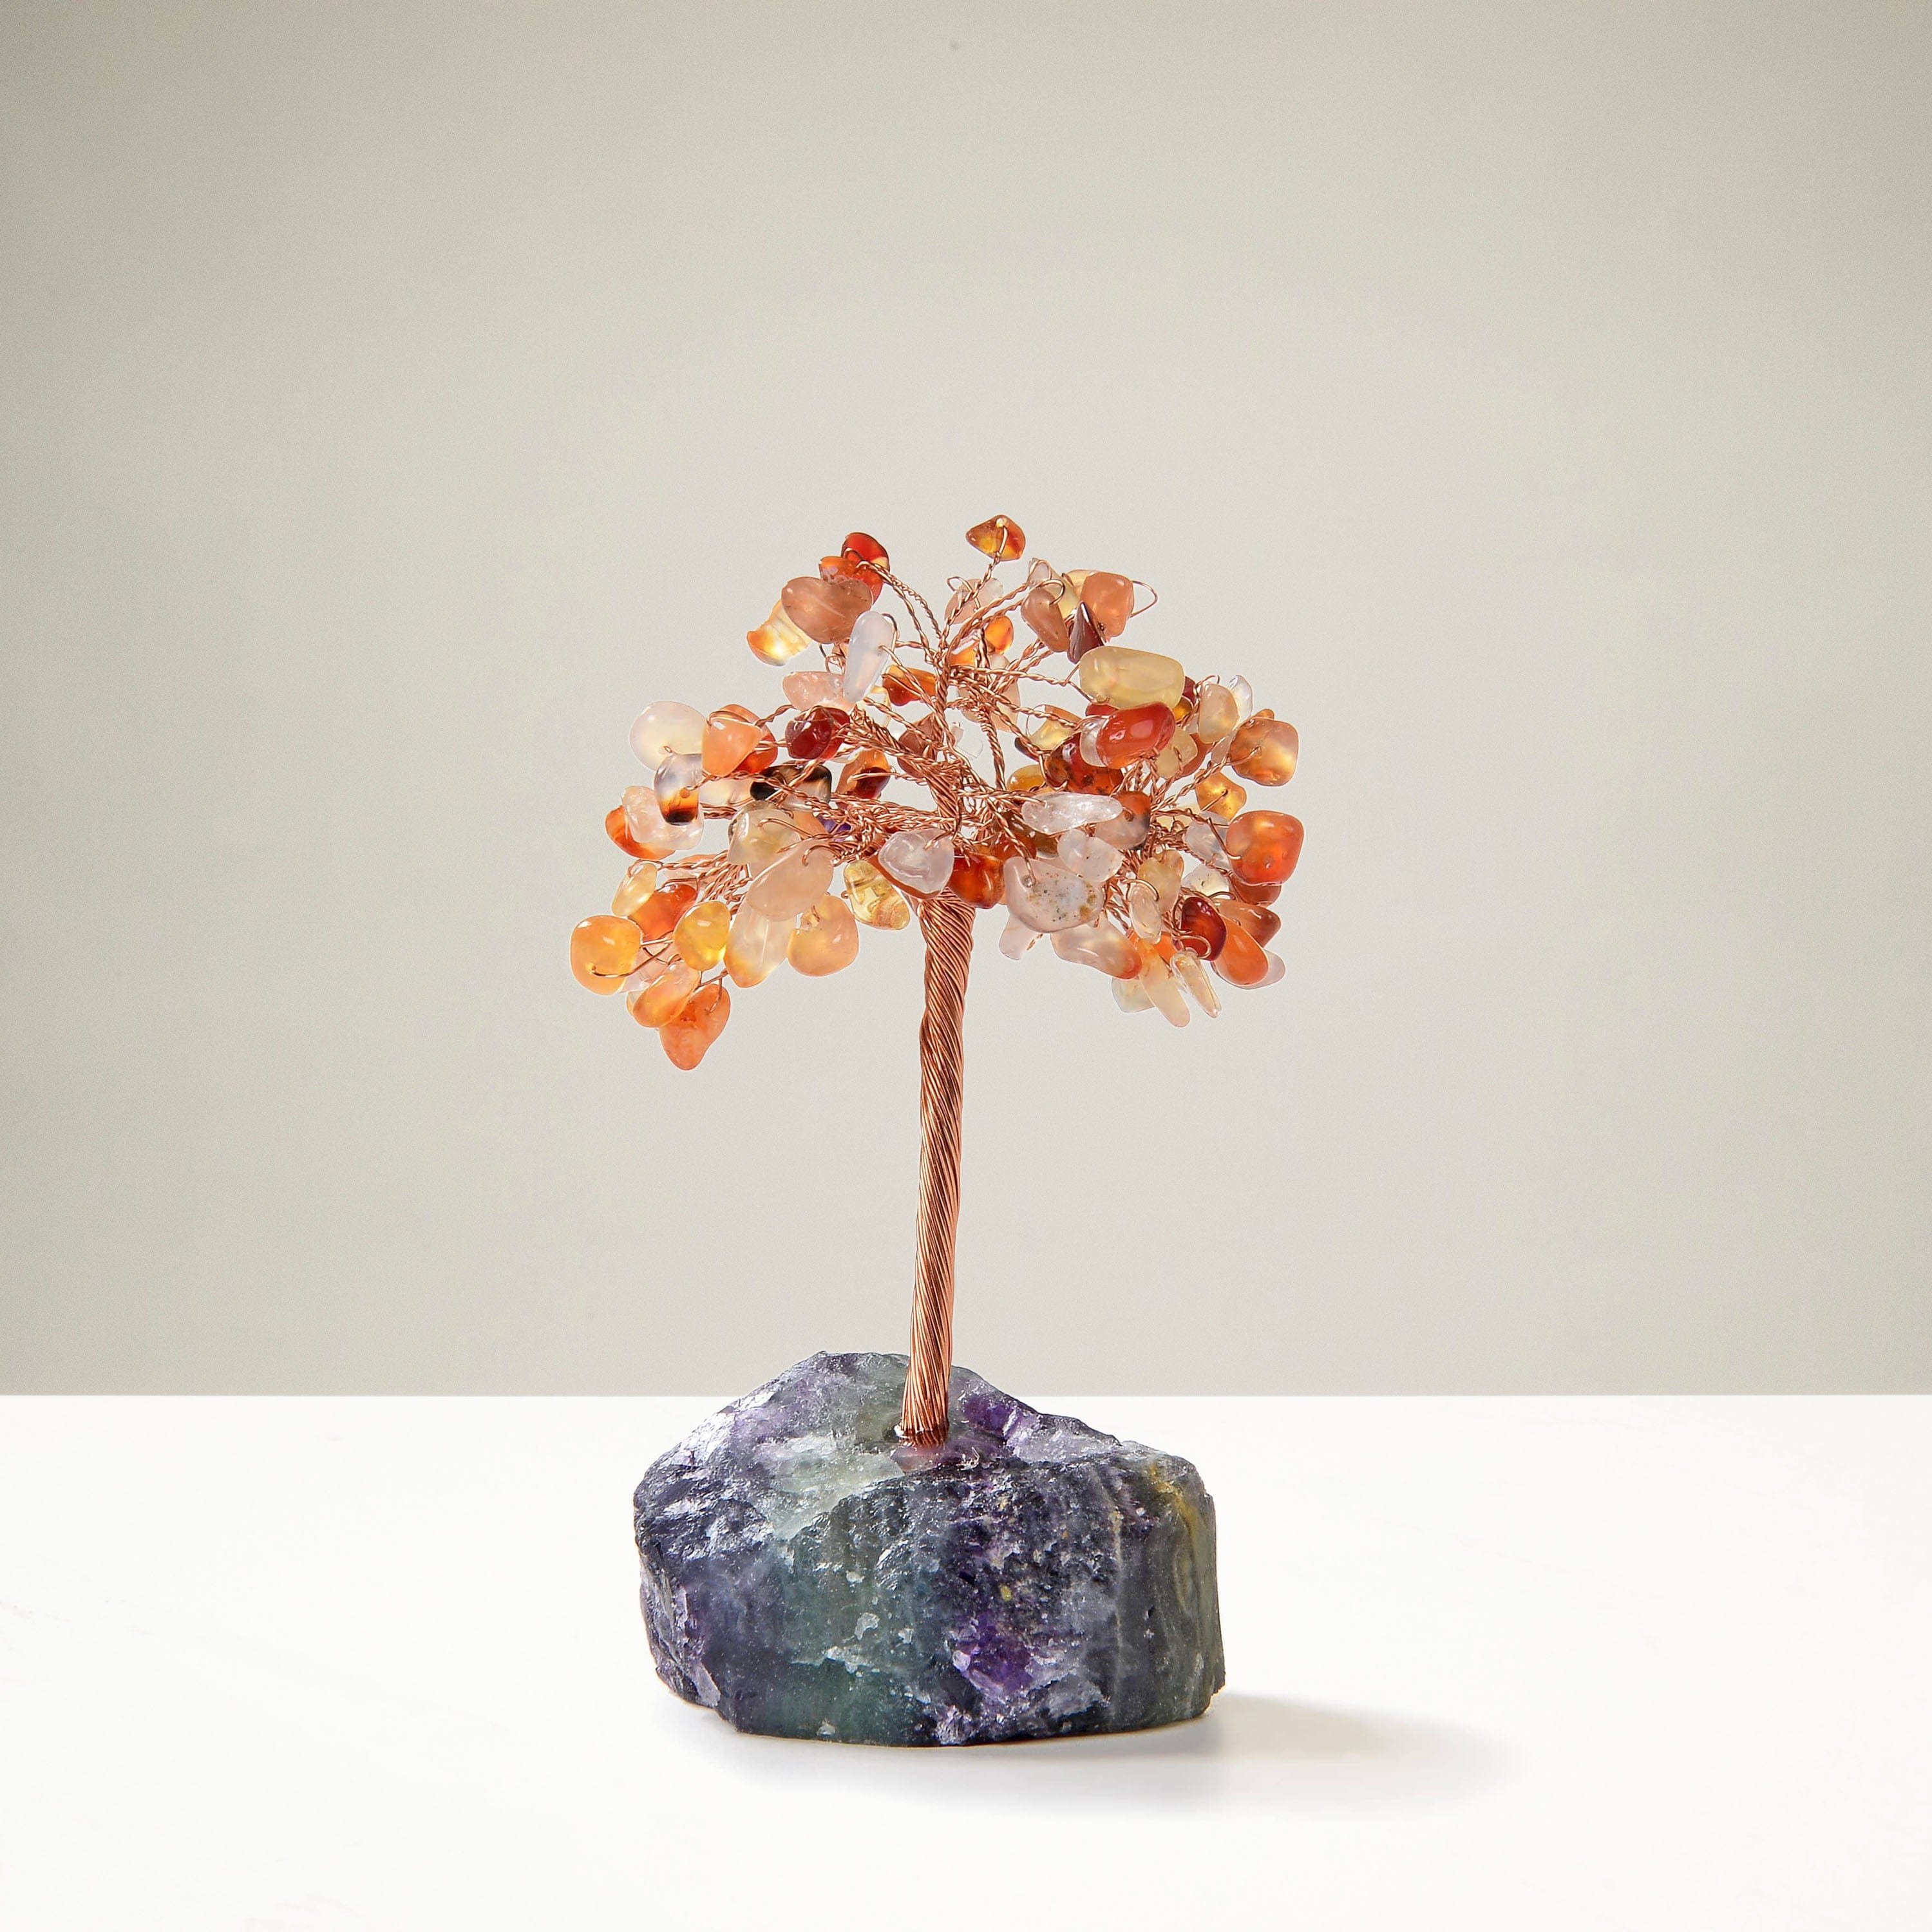 Kalifano Gemstone Trees Carnelian Natural Gemstone Tree of Life with Fluorite Base K913F-CR